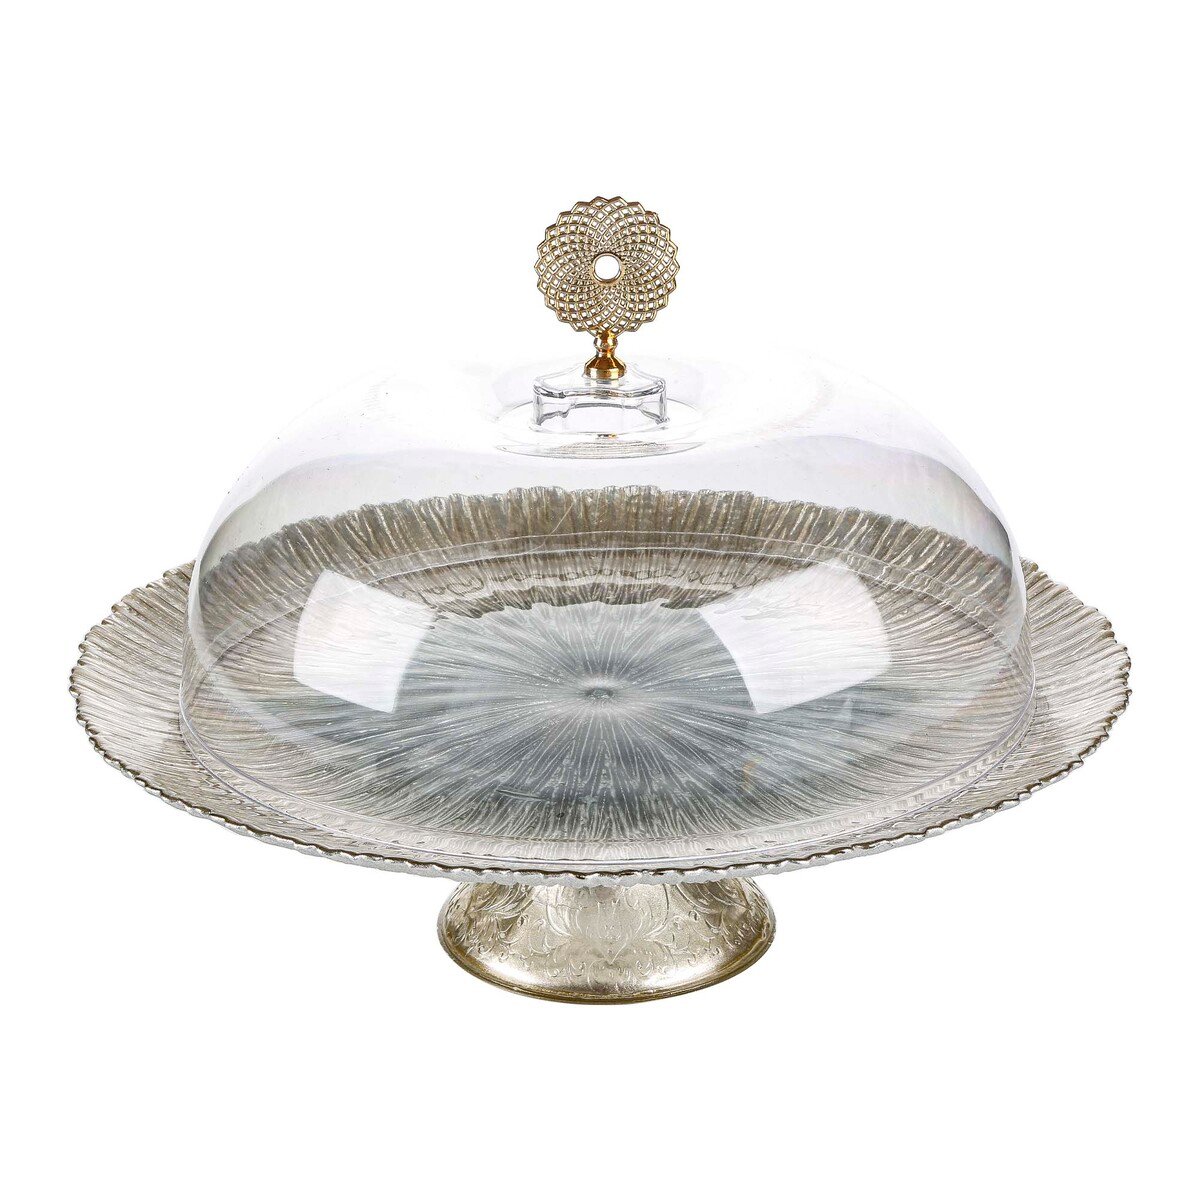 Glascom Glass Base With Acrylic Dome Decorative Bowl, 33 cm, FV27